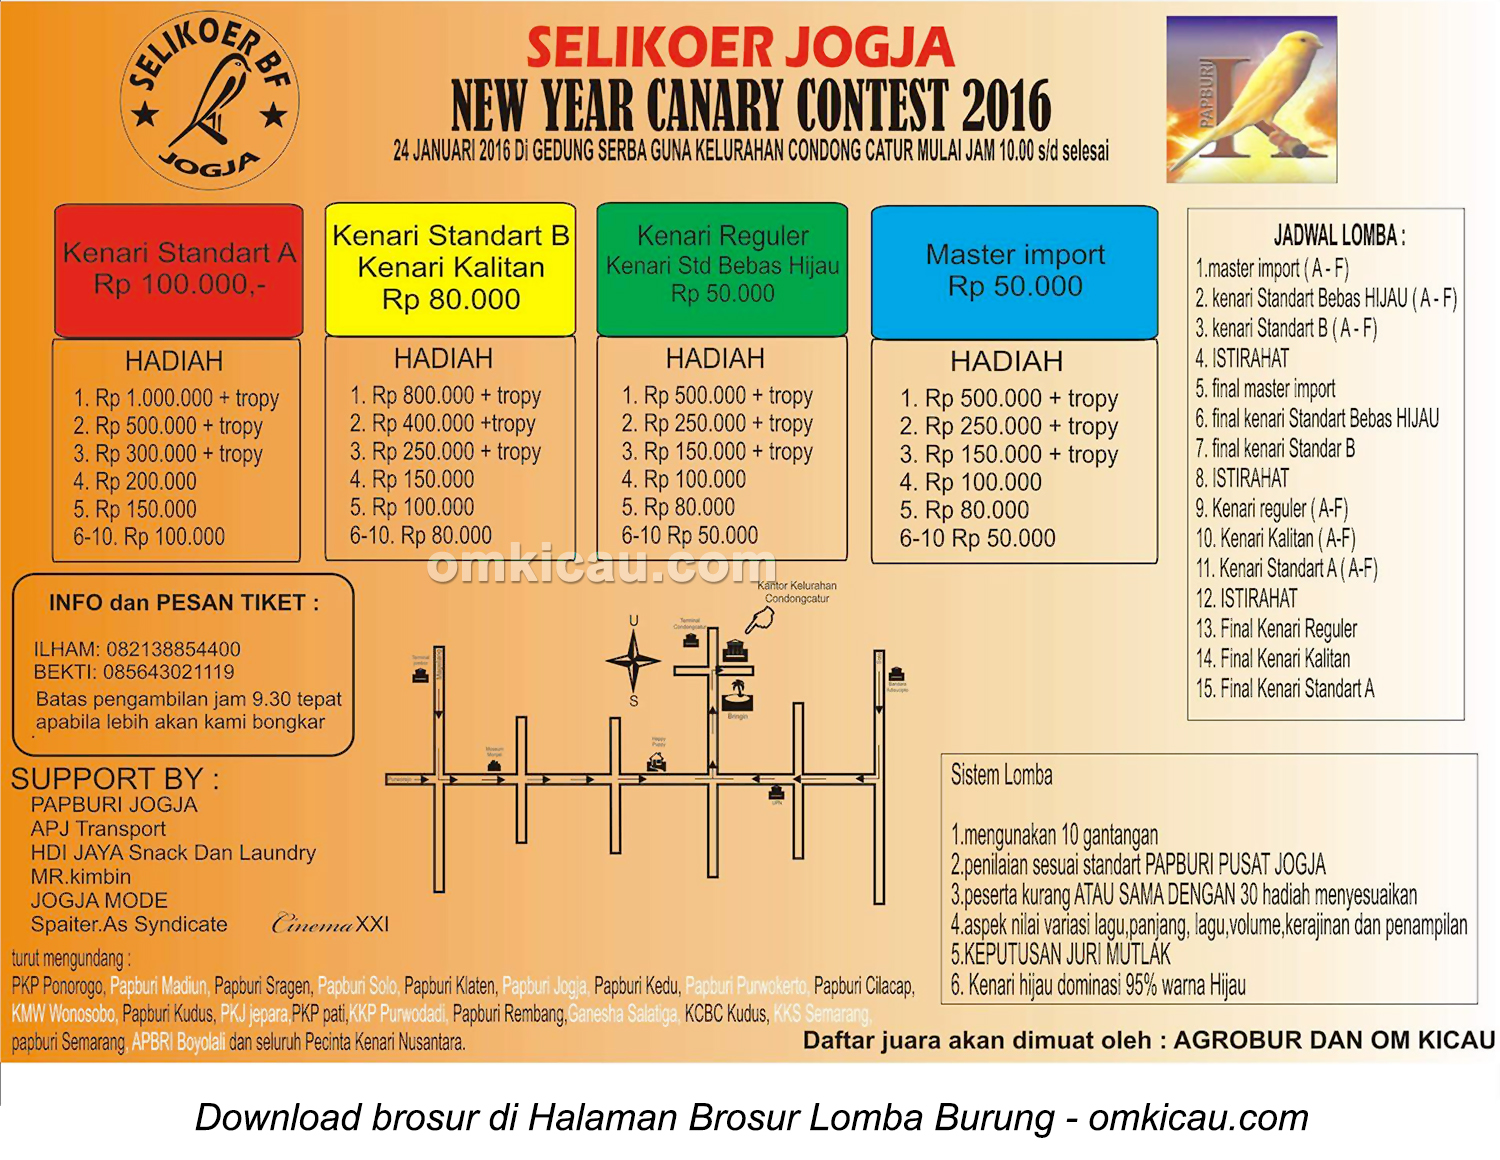 Brosur New Year Canary Contest - Selikoer BF Jogja, 24 Januari 2016